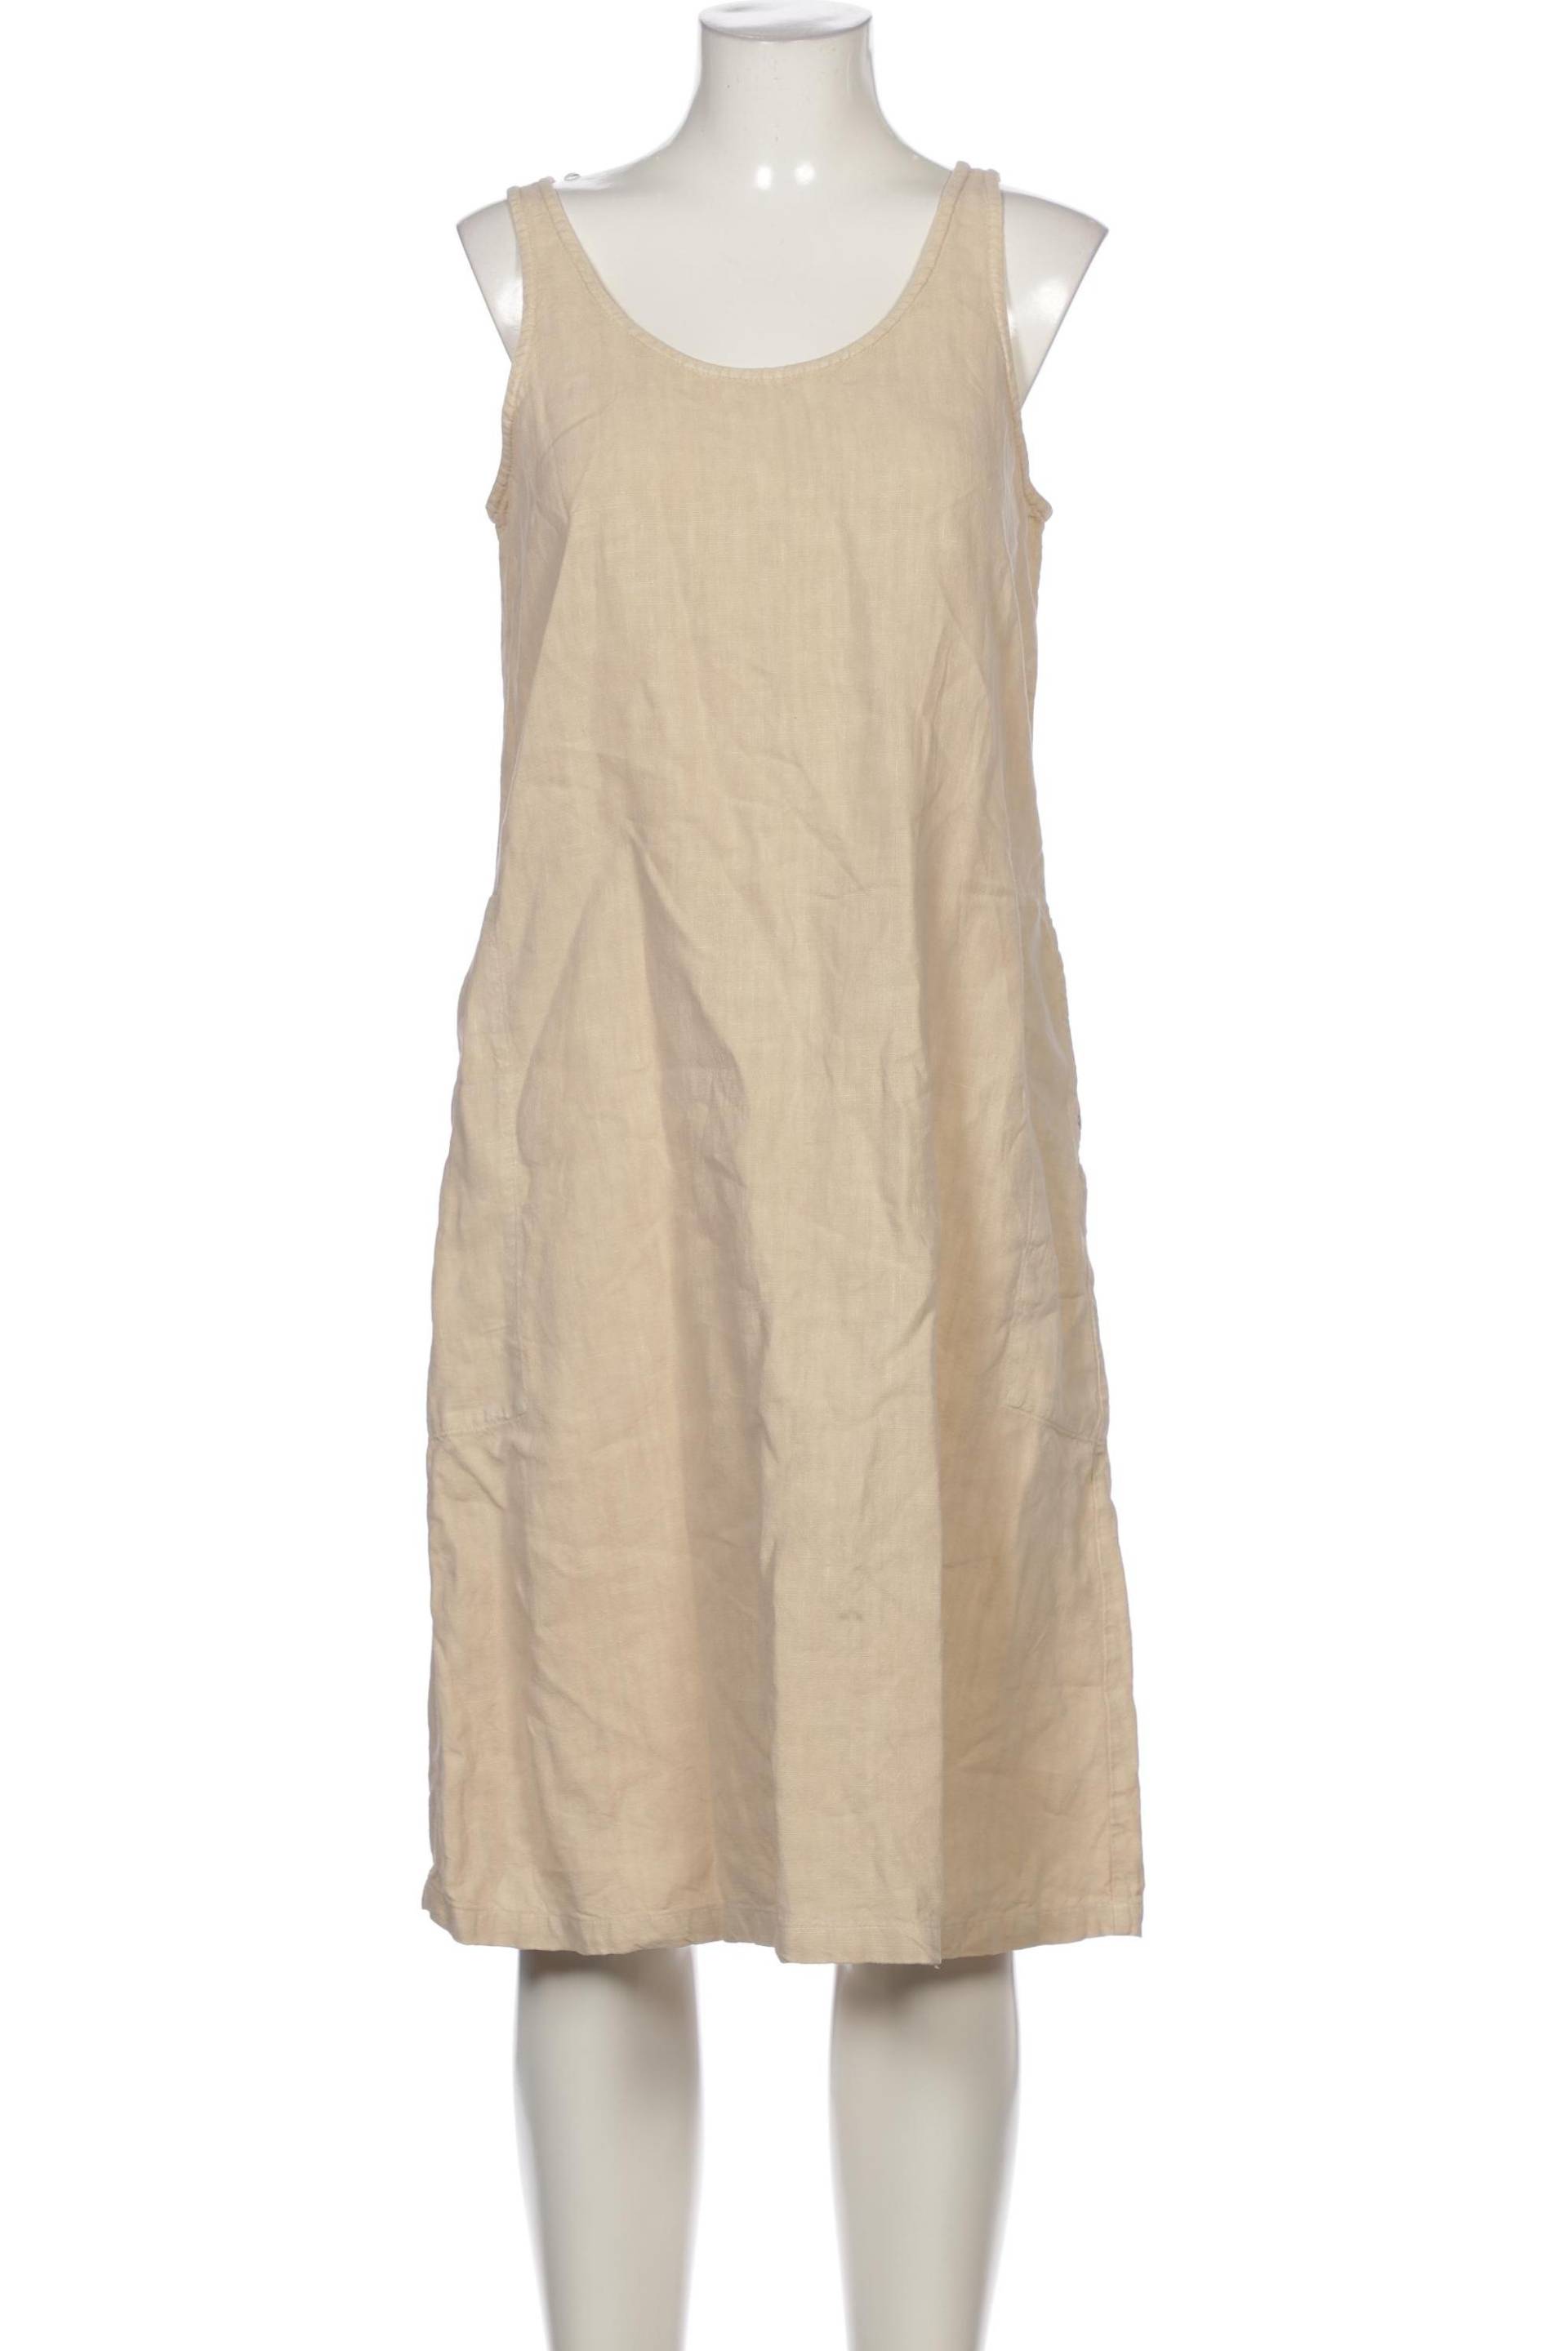 Oska Damen Kleid, beige, Gr. 38 von Oska